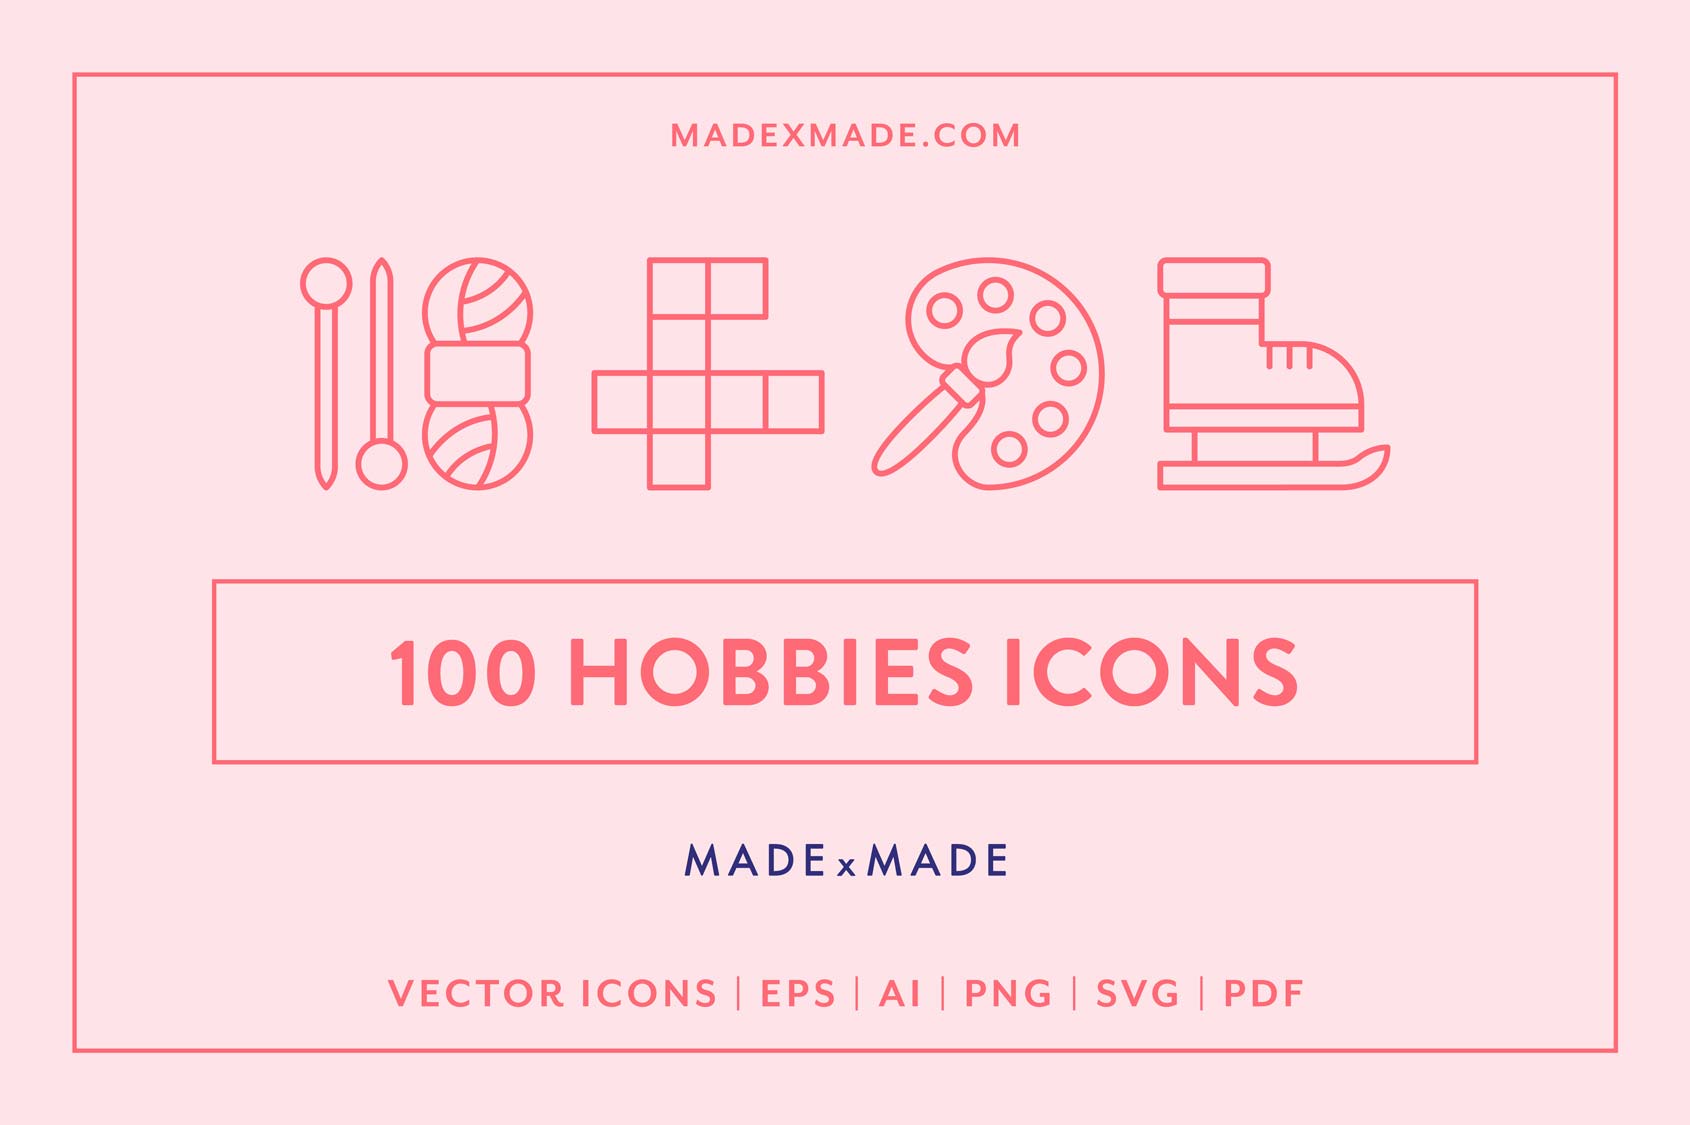 made x made icons hobbies